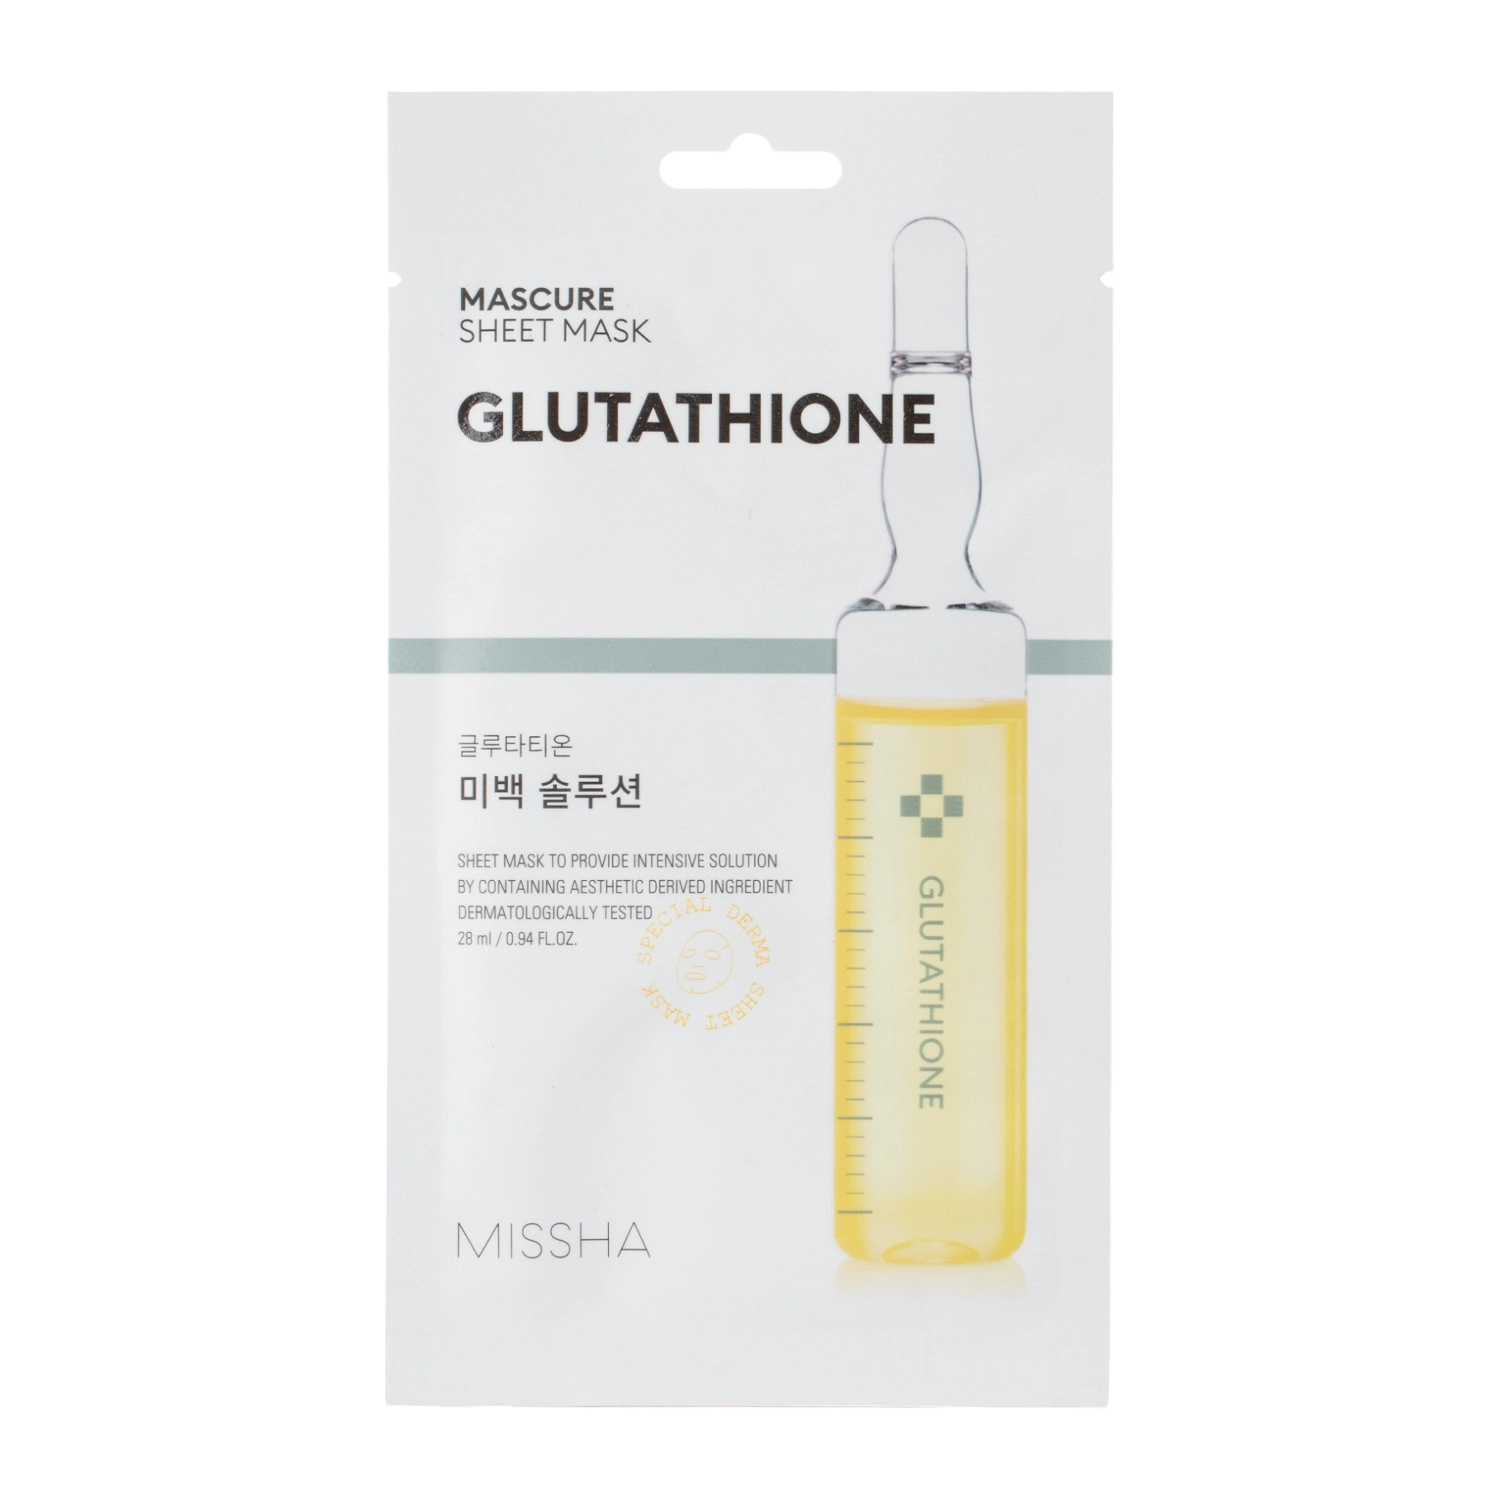 Missha - Mascure Sheet Mask - Glutathione - Plátýnková maska s glutathionem - 28 ml